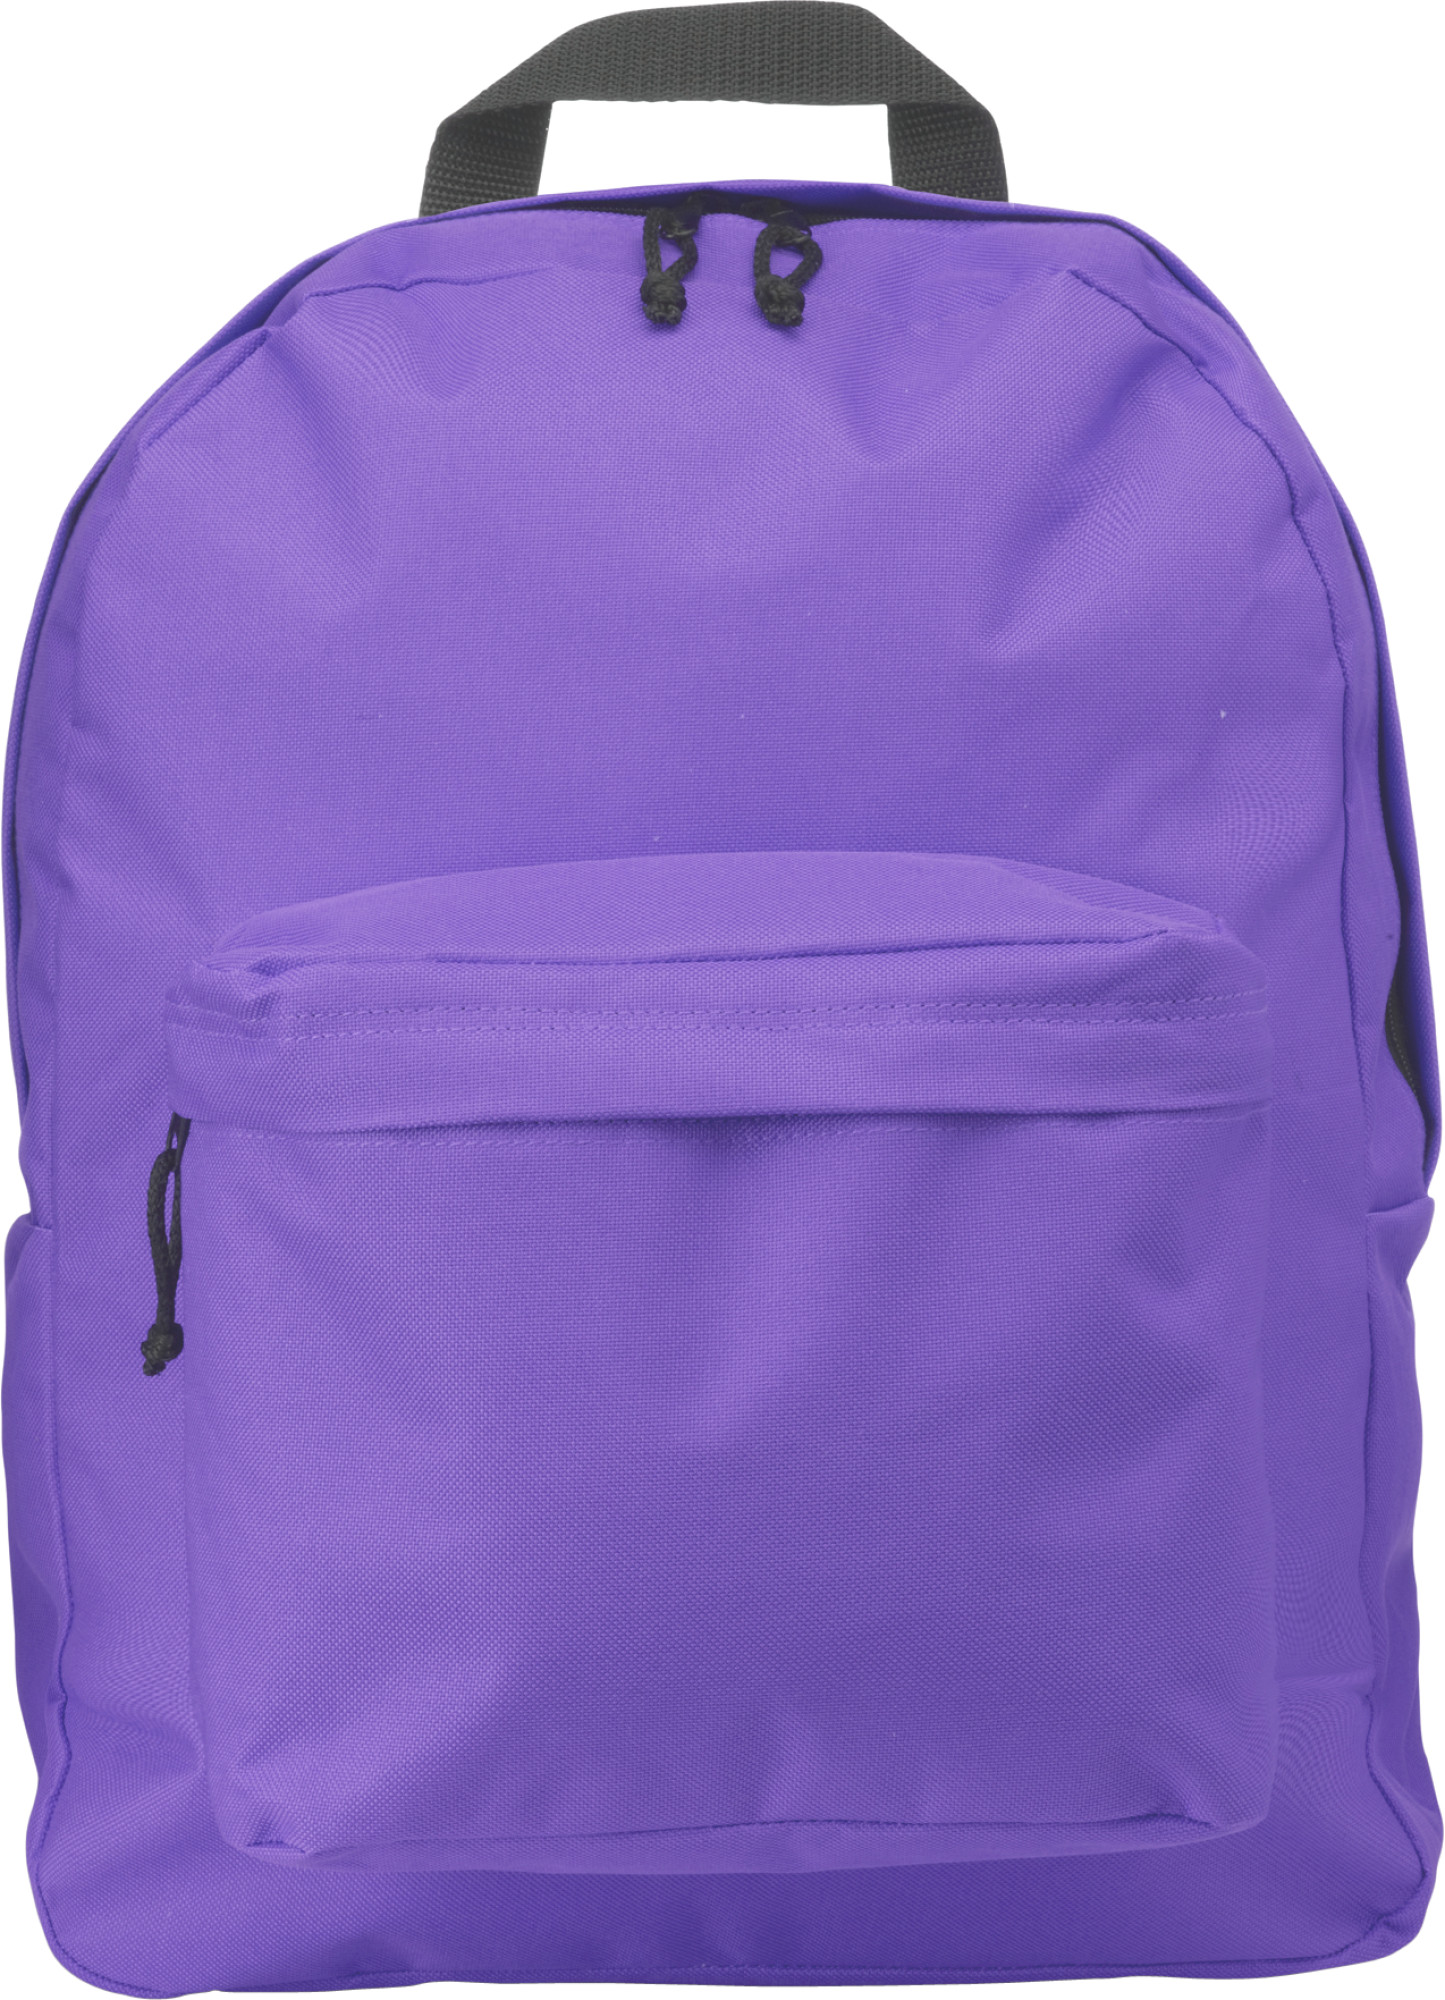 Branded Polyester backpack